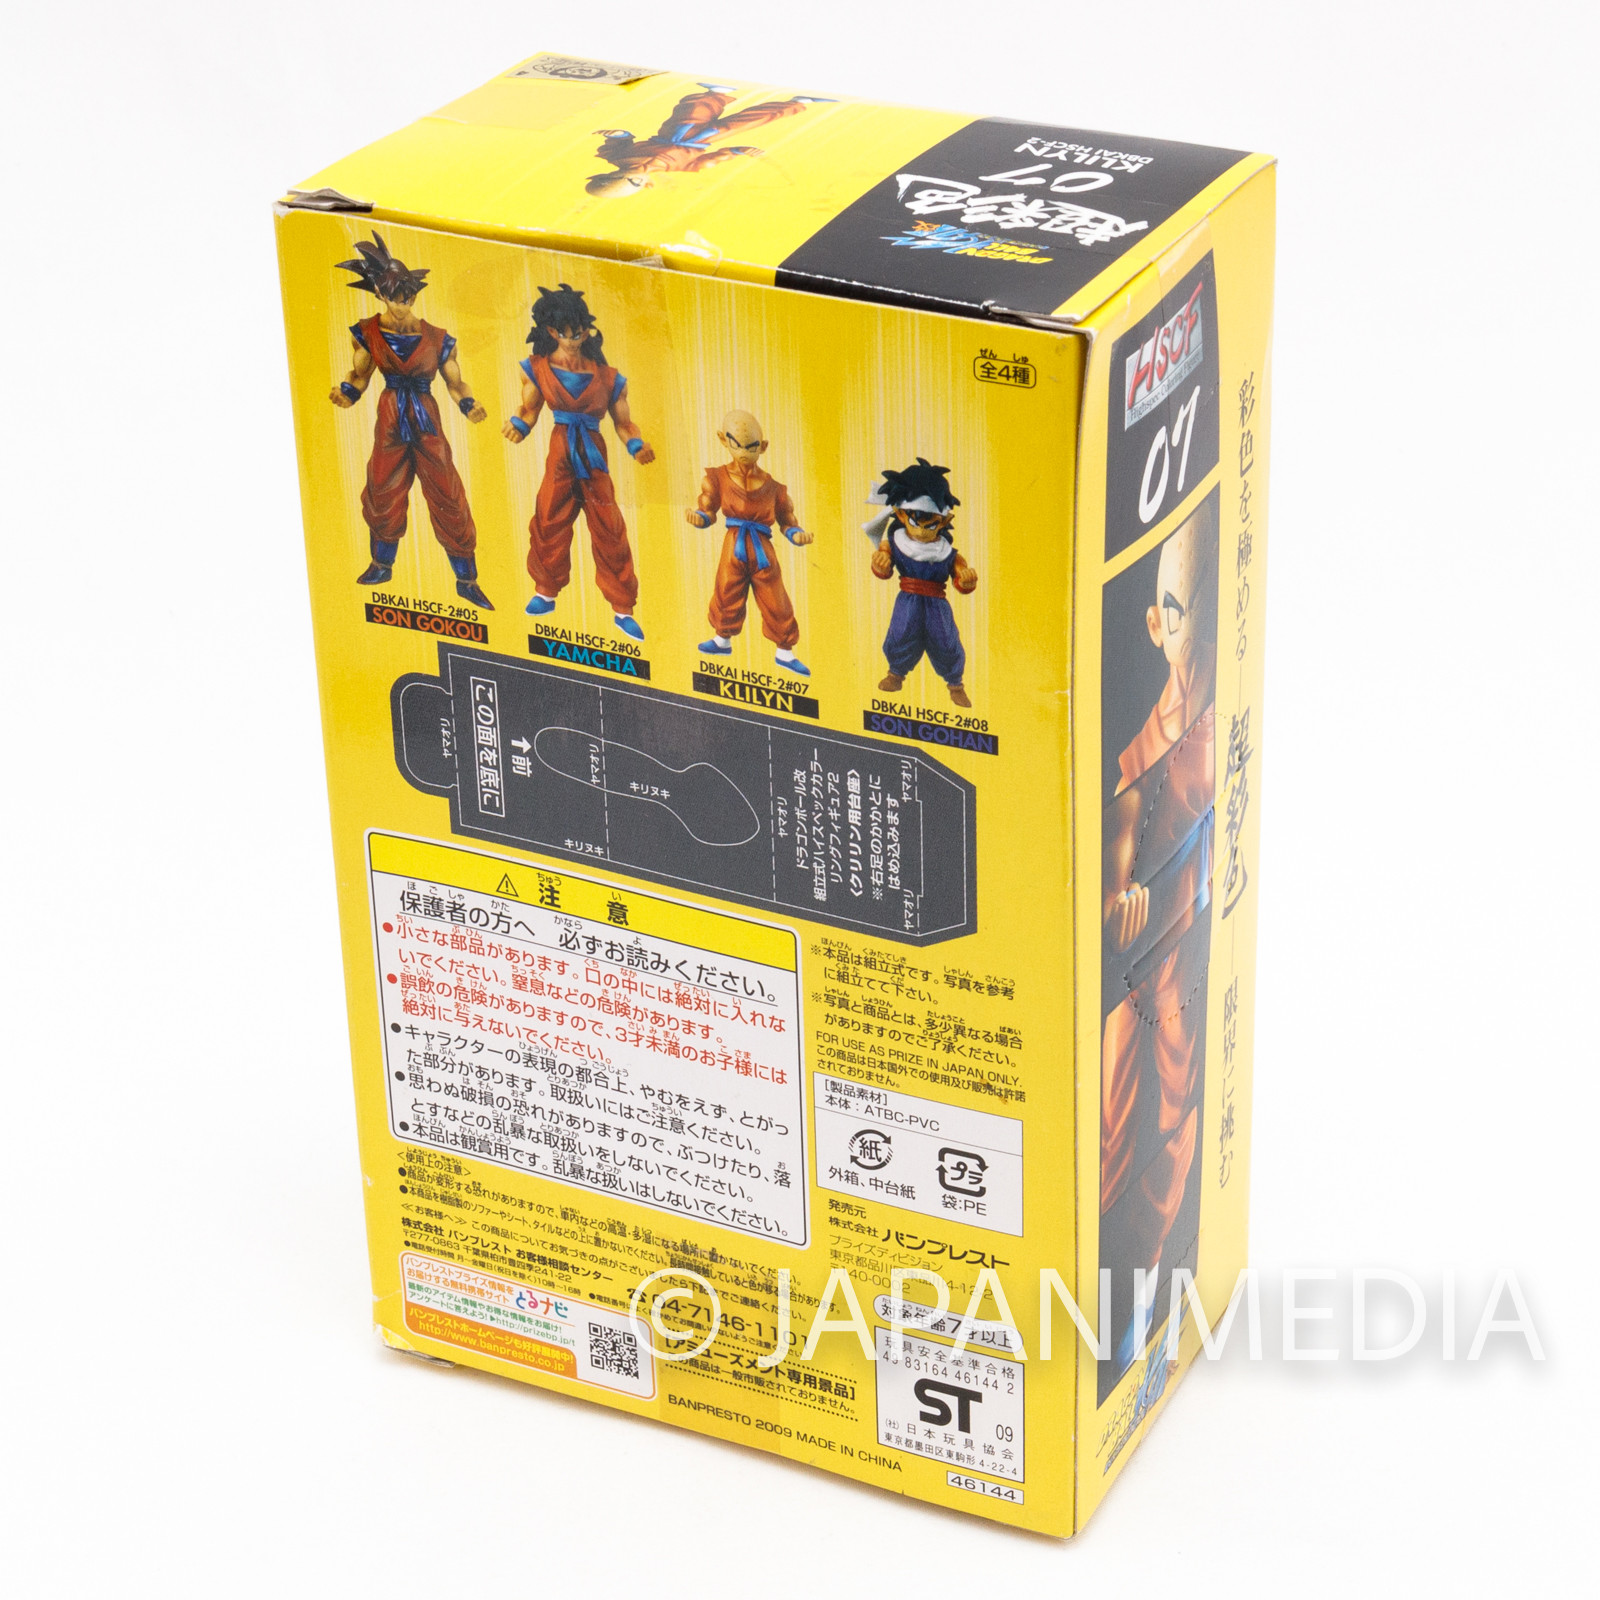 Dragon Ball KAI Krillin HSCF Figure high spec coloring JAPAN ANIME MANGA